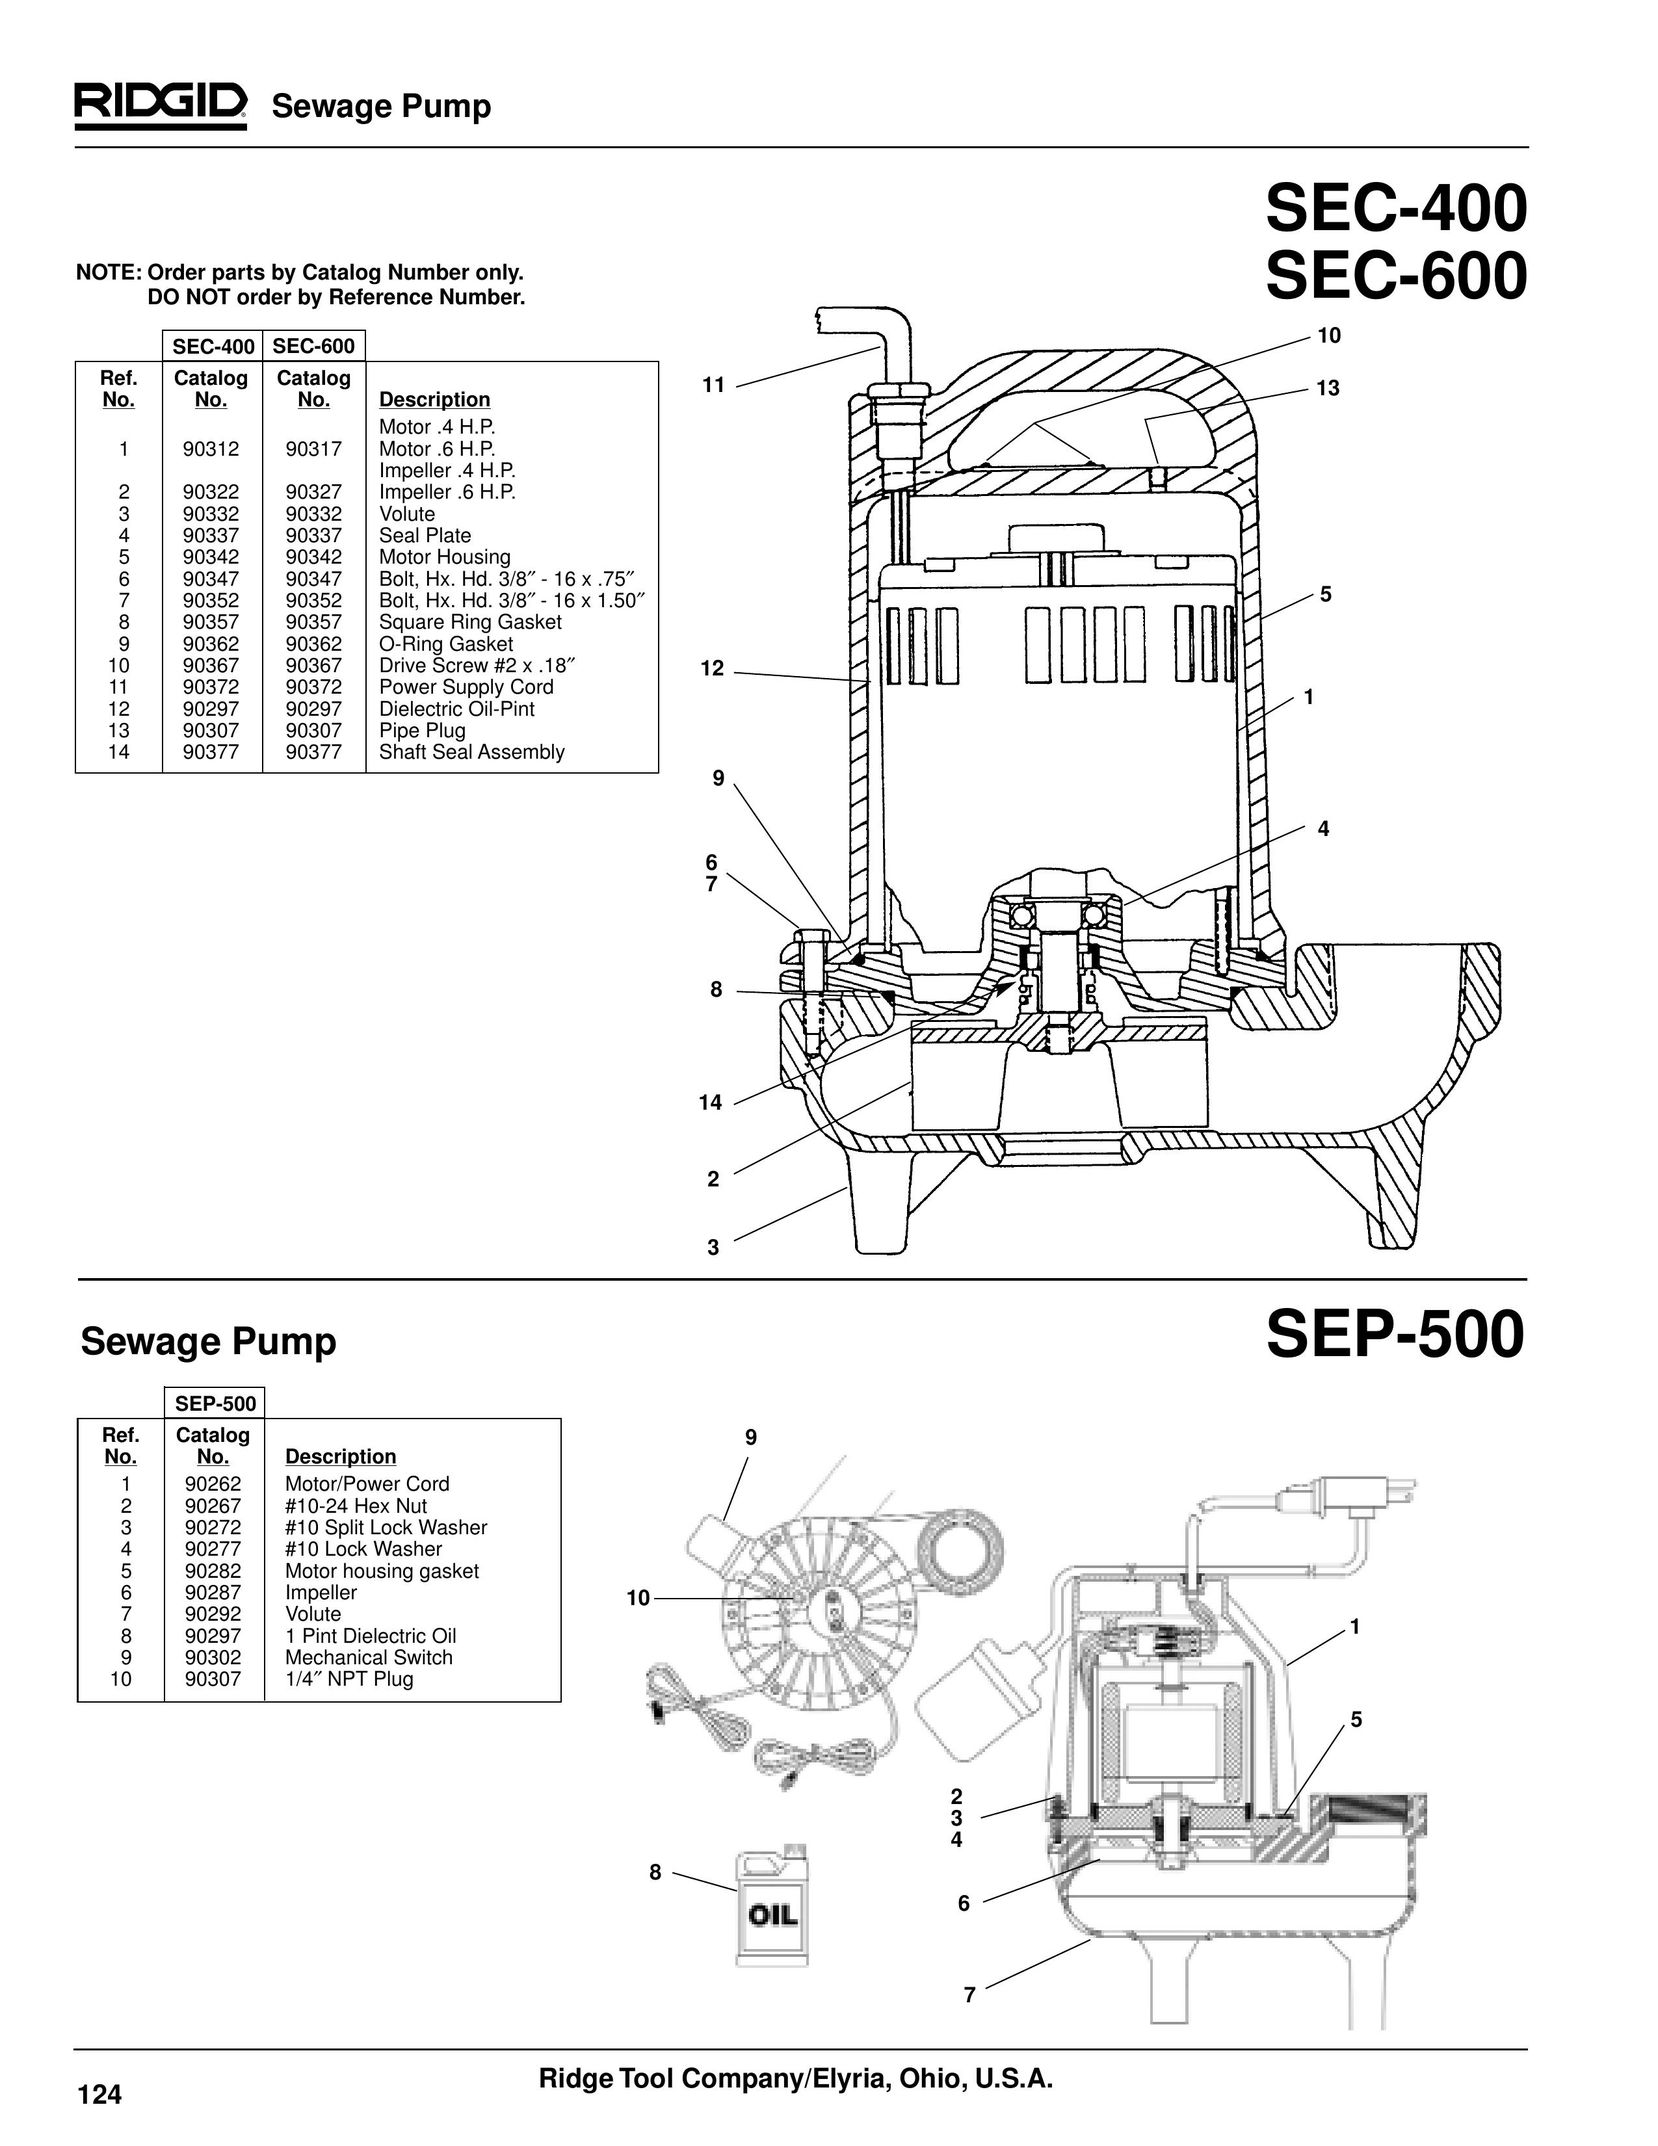 RIDGID SEC-600 Plumbing Product User Manual